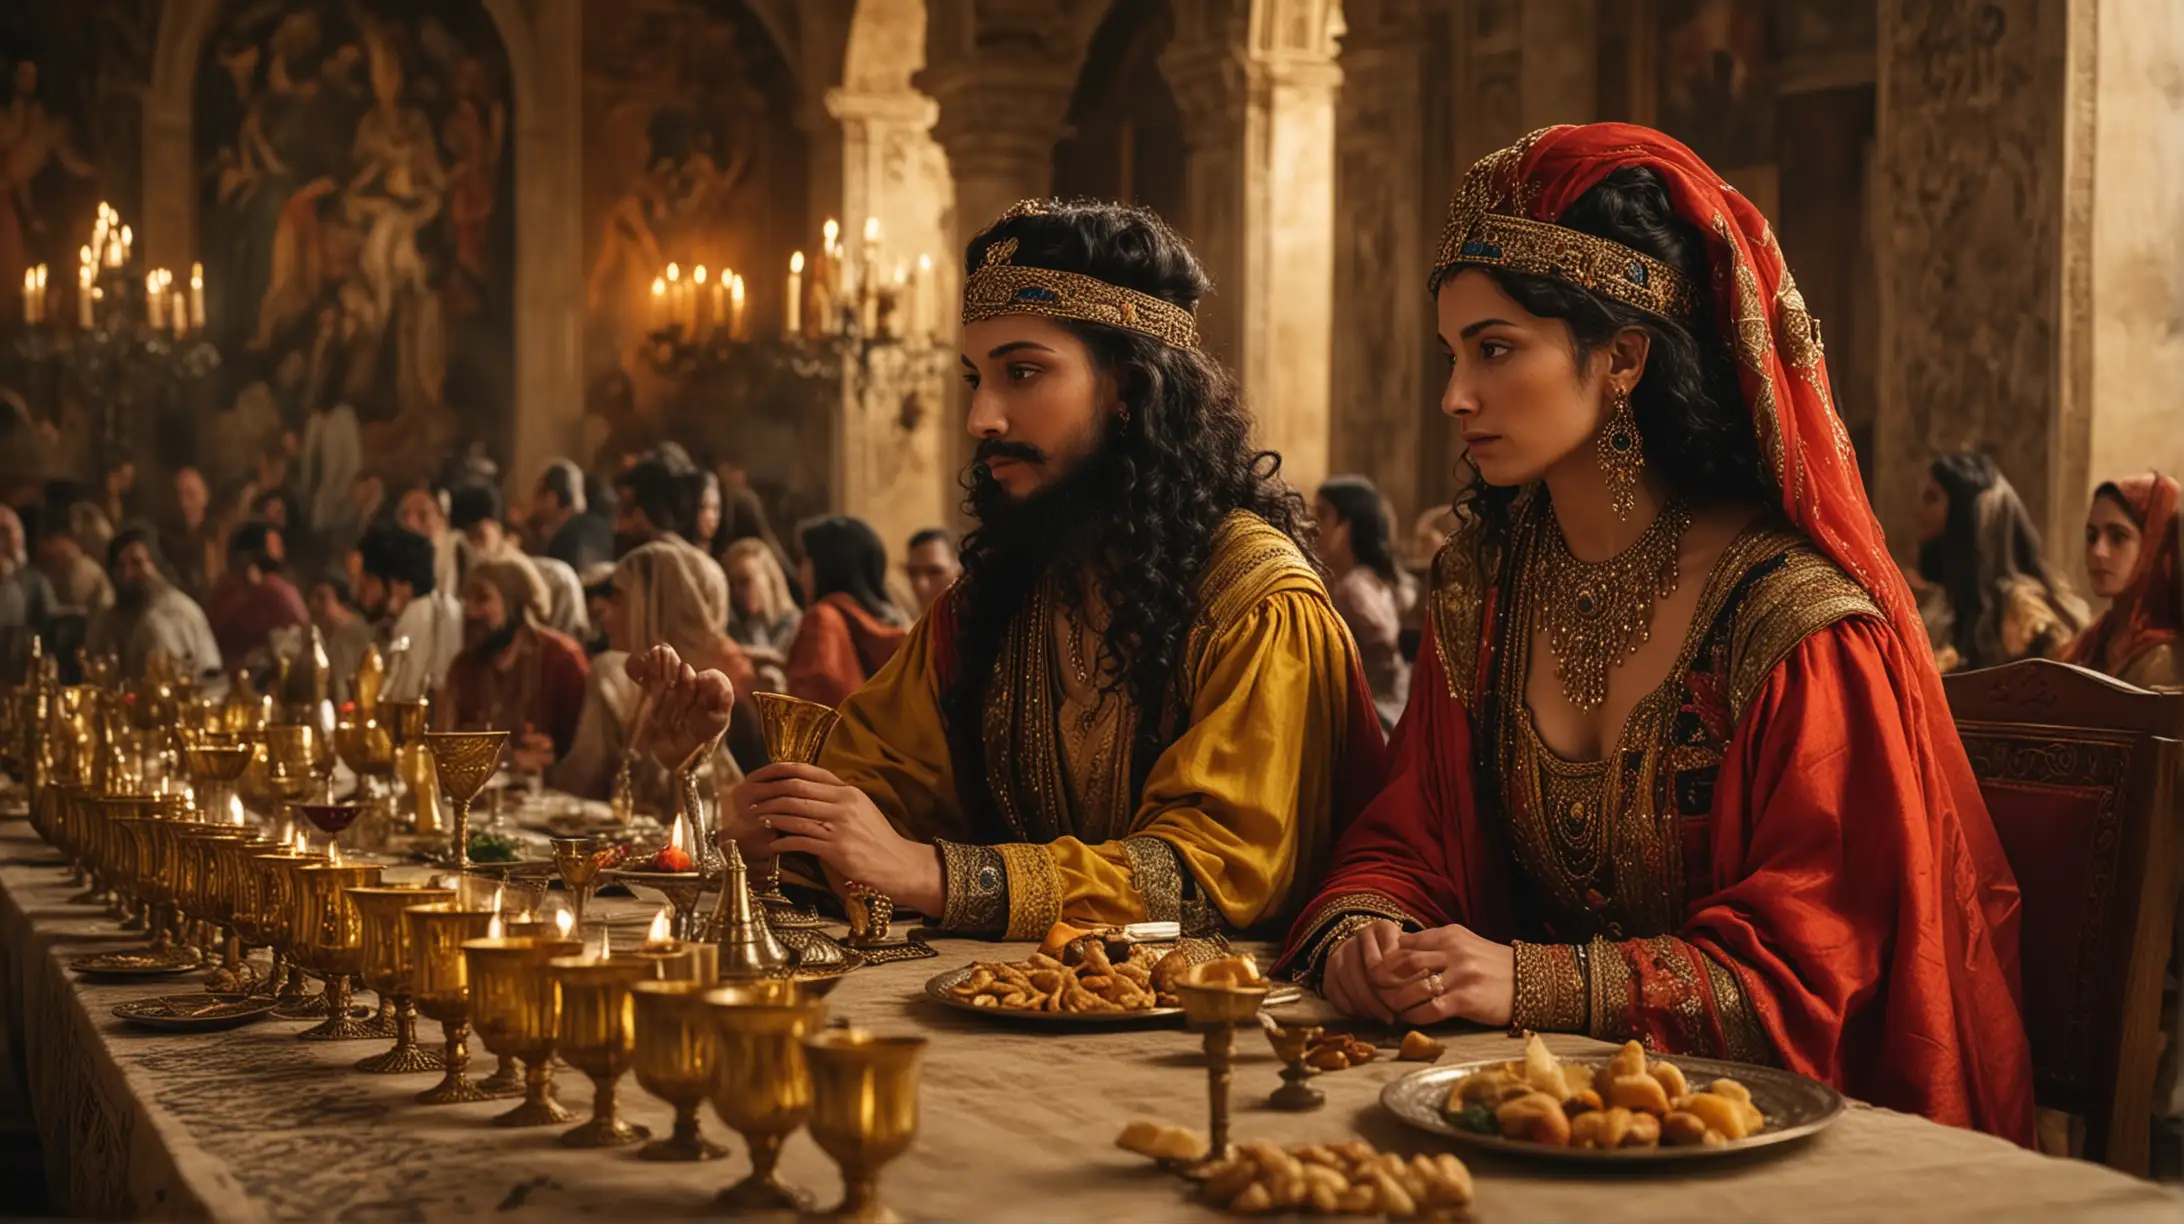 Queen of Sheba and King Solomon in Ancient Oriental Banquet Scene